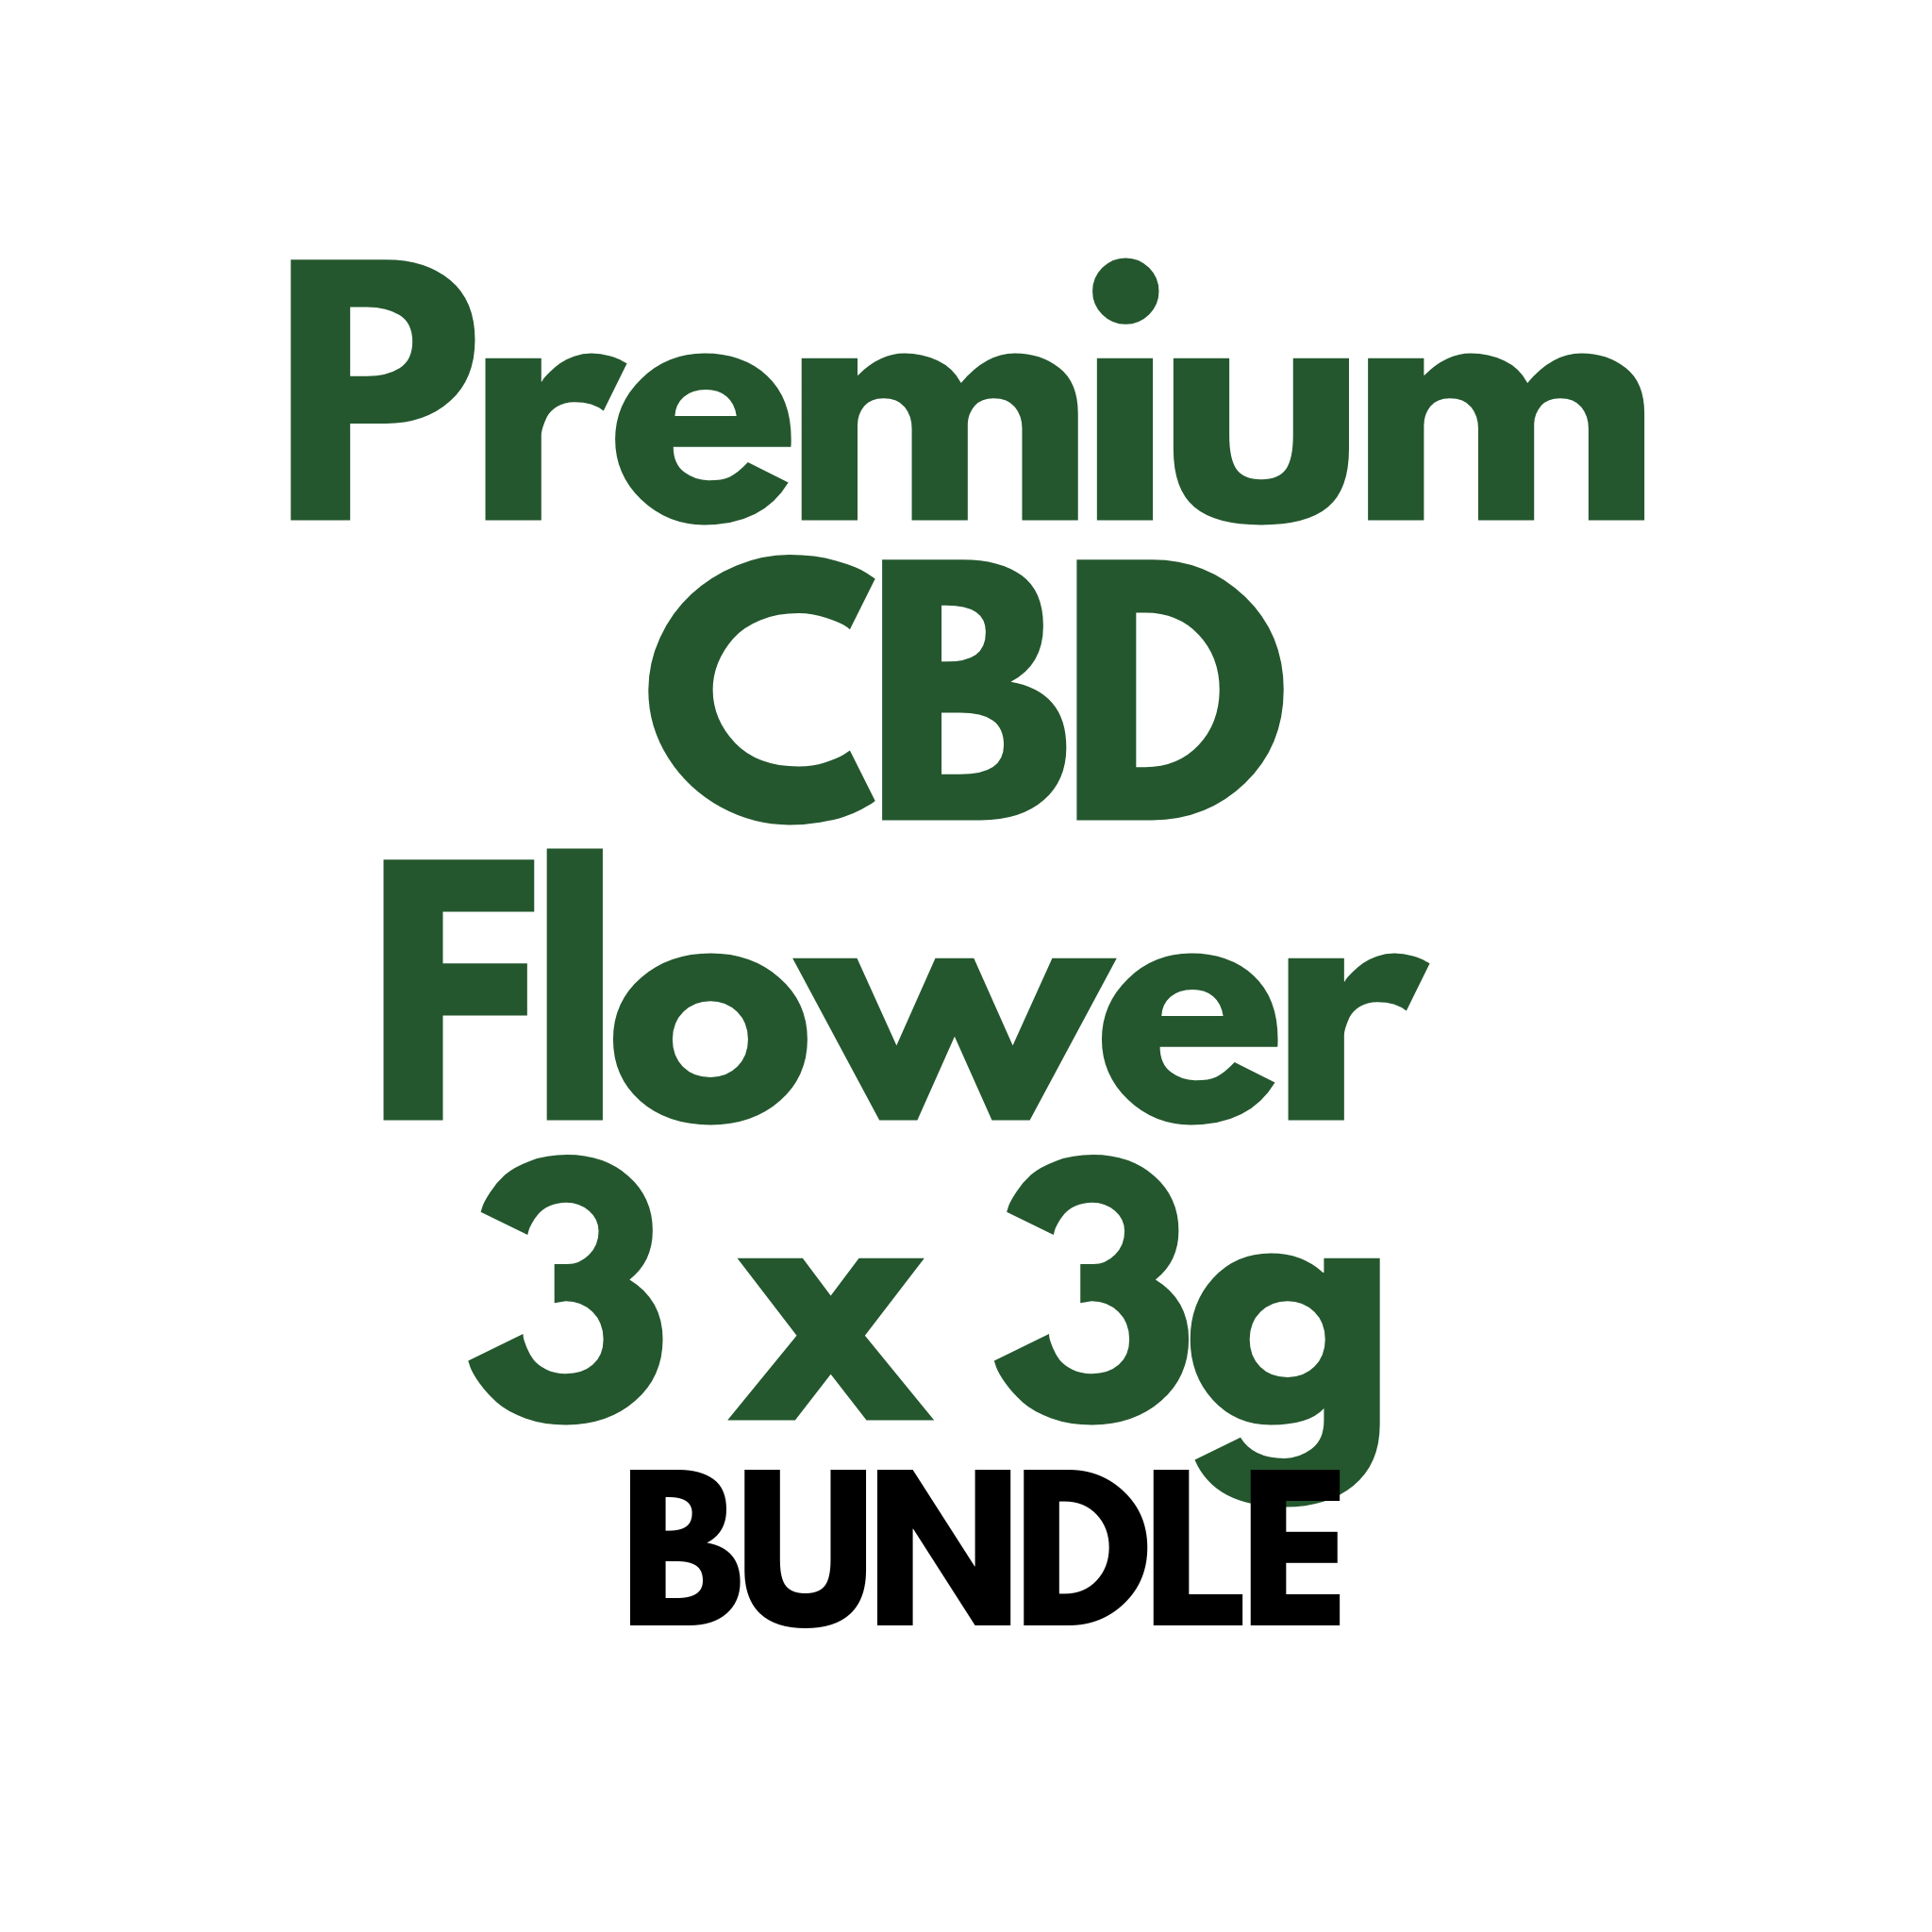 Premium CBD Flower 3 x 3g Bundle Deal